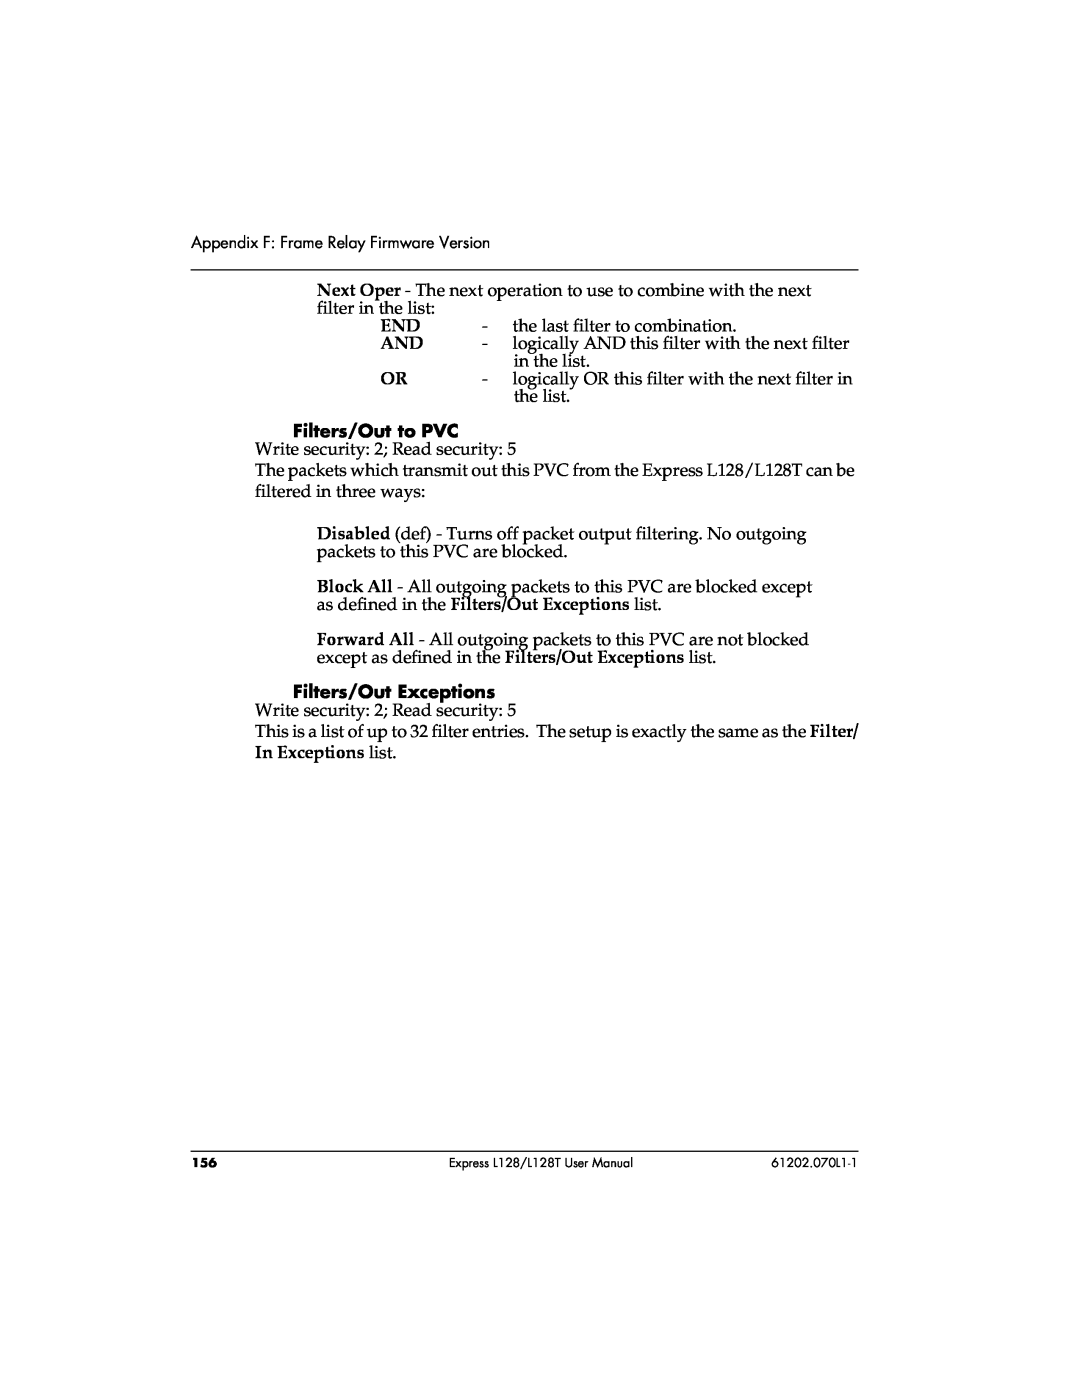 ADTRAN L128T user manual In Exceptions list 